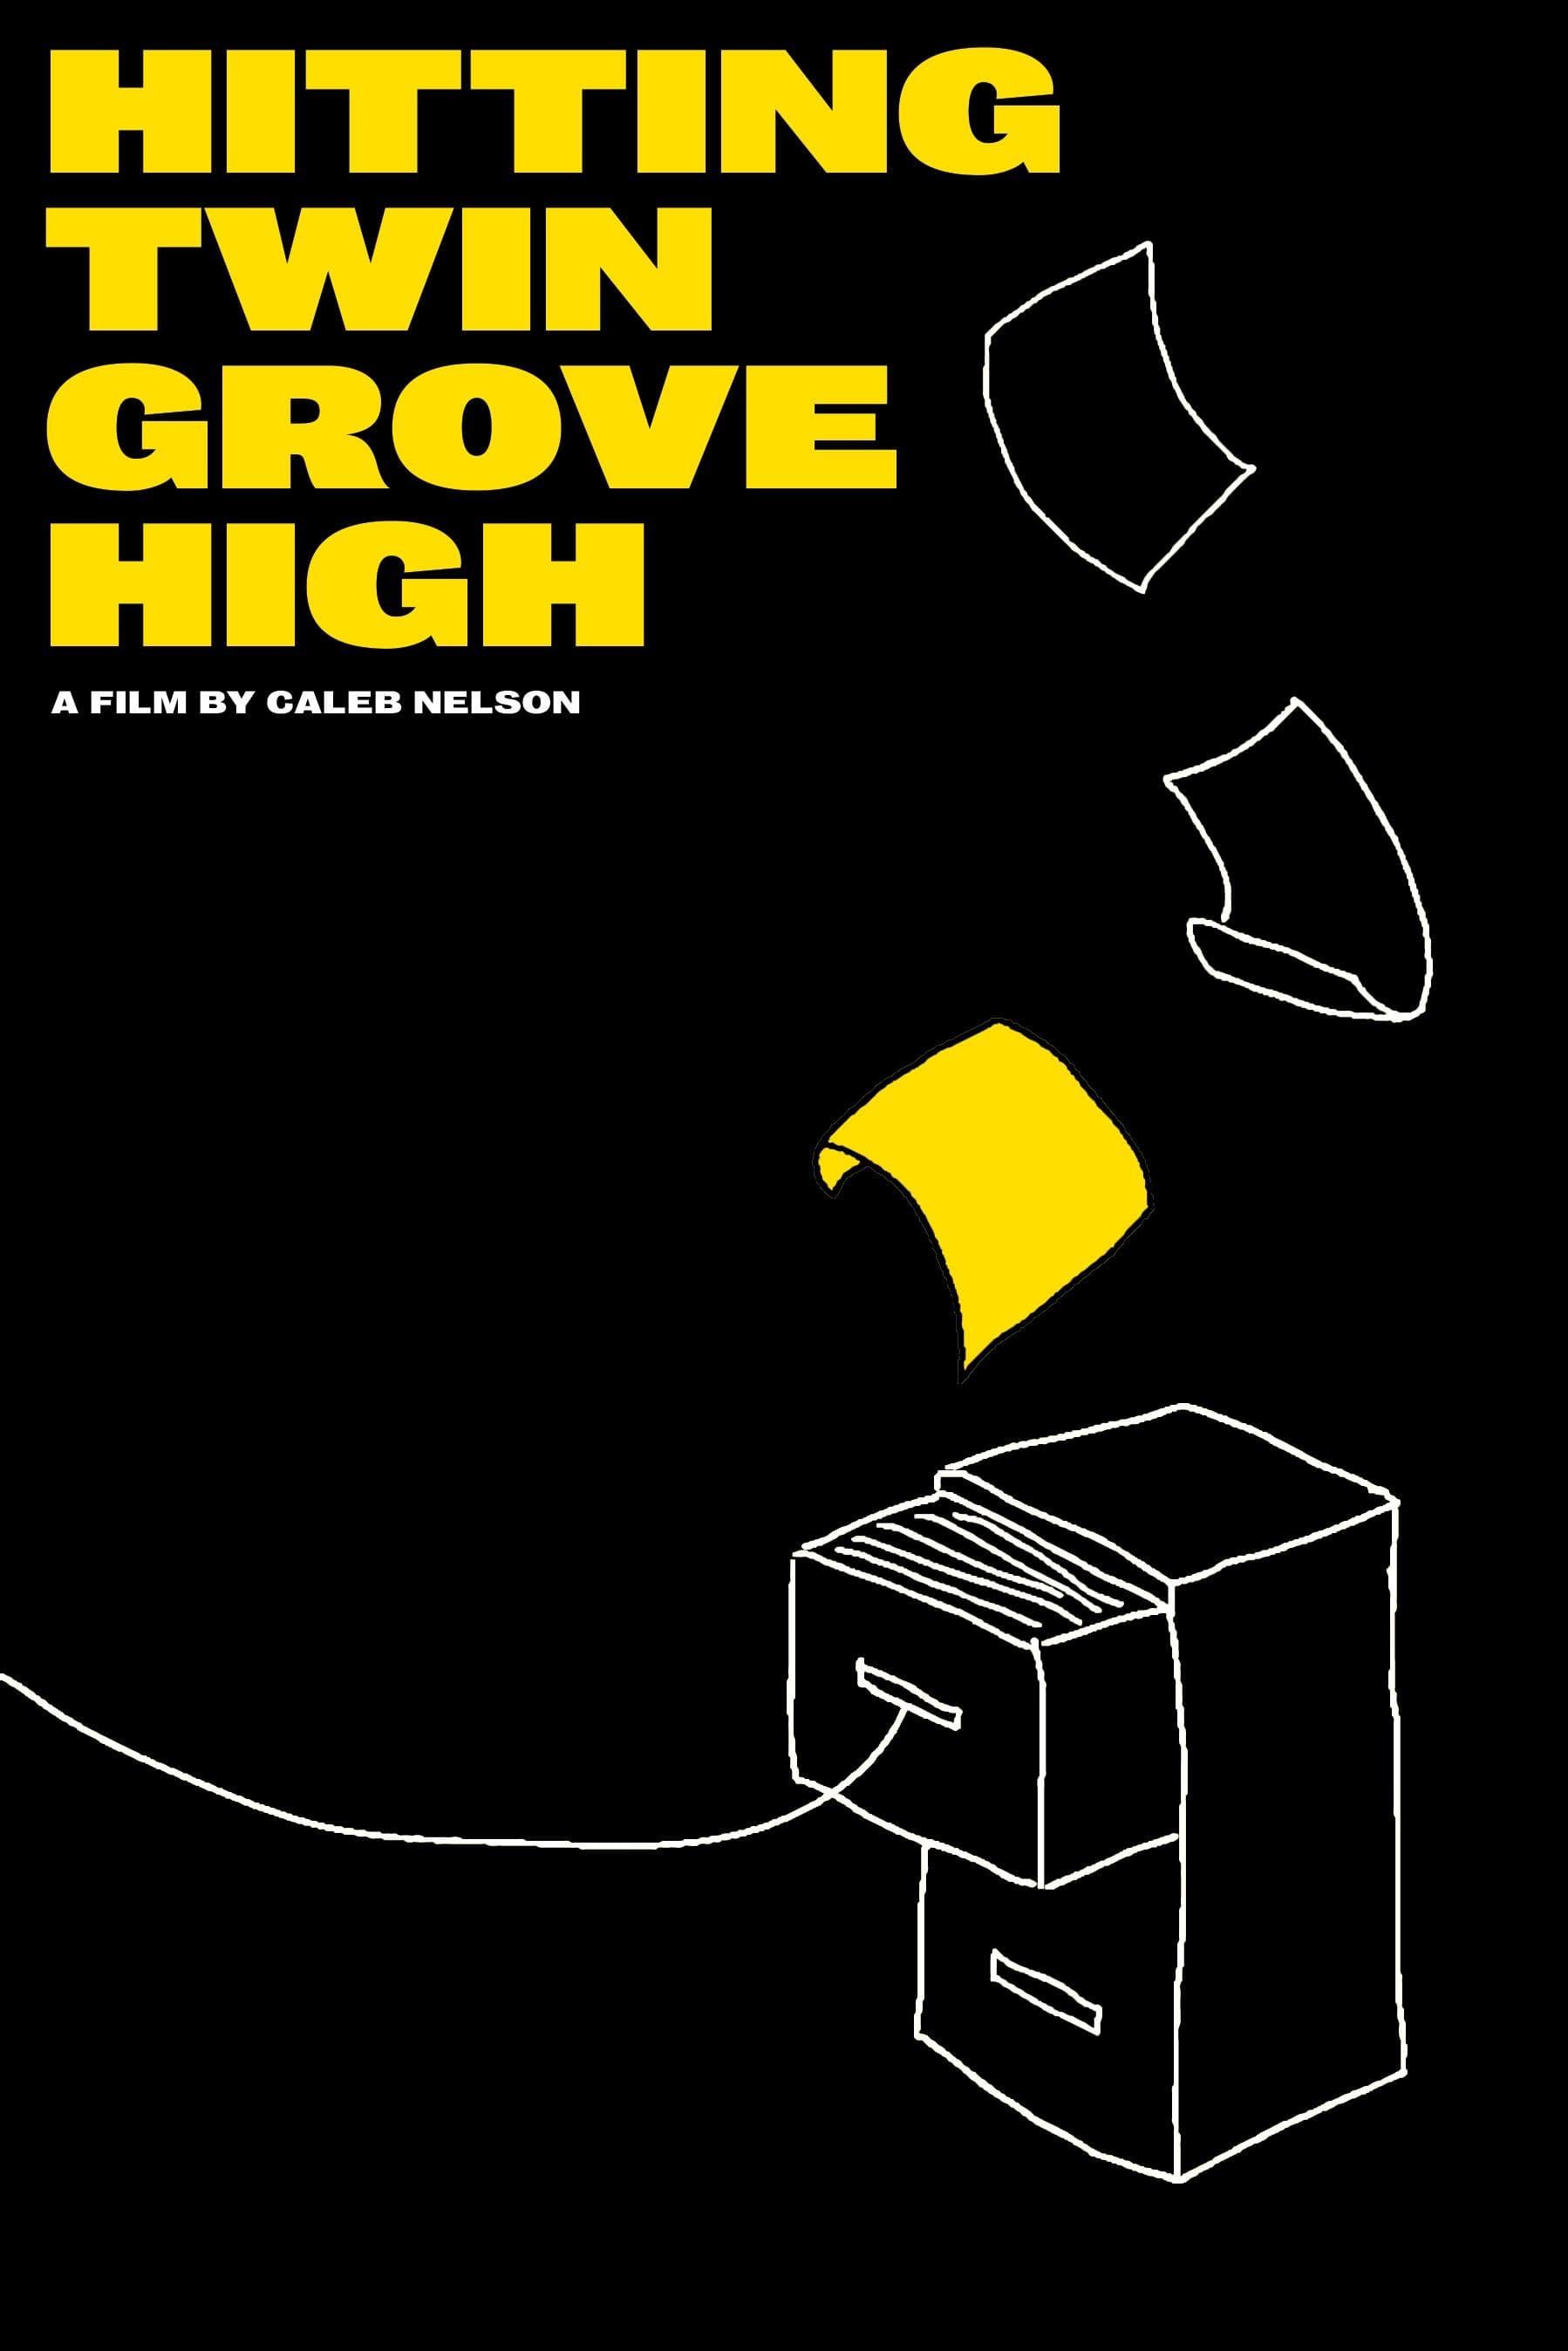 Hitting Twin Grove High poster